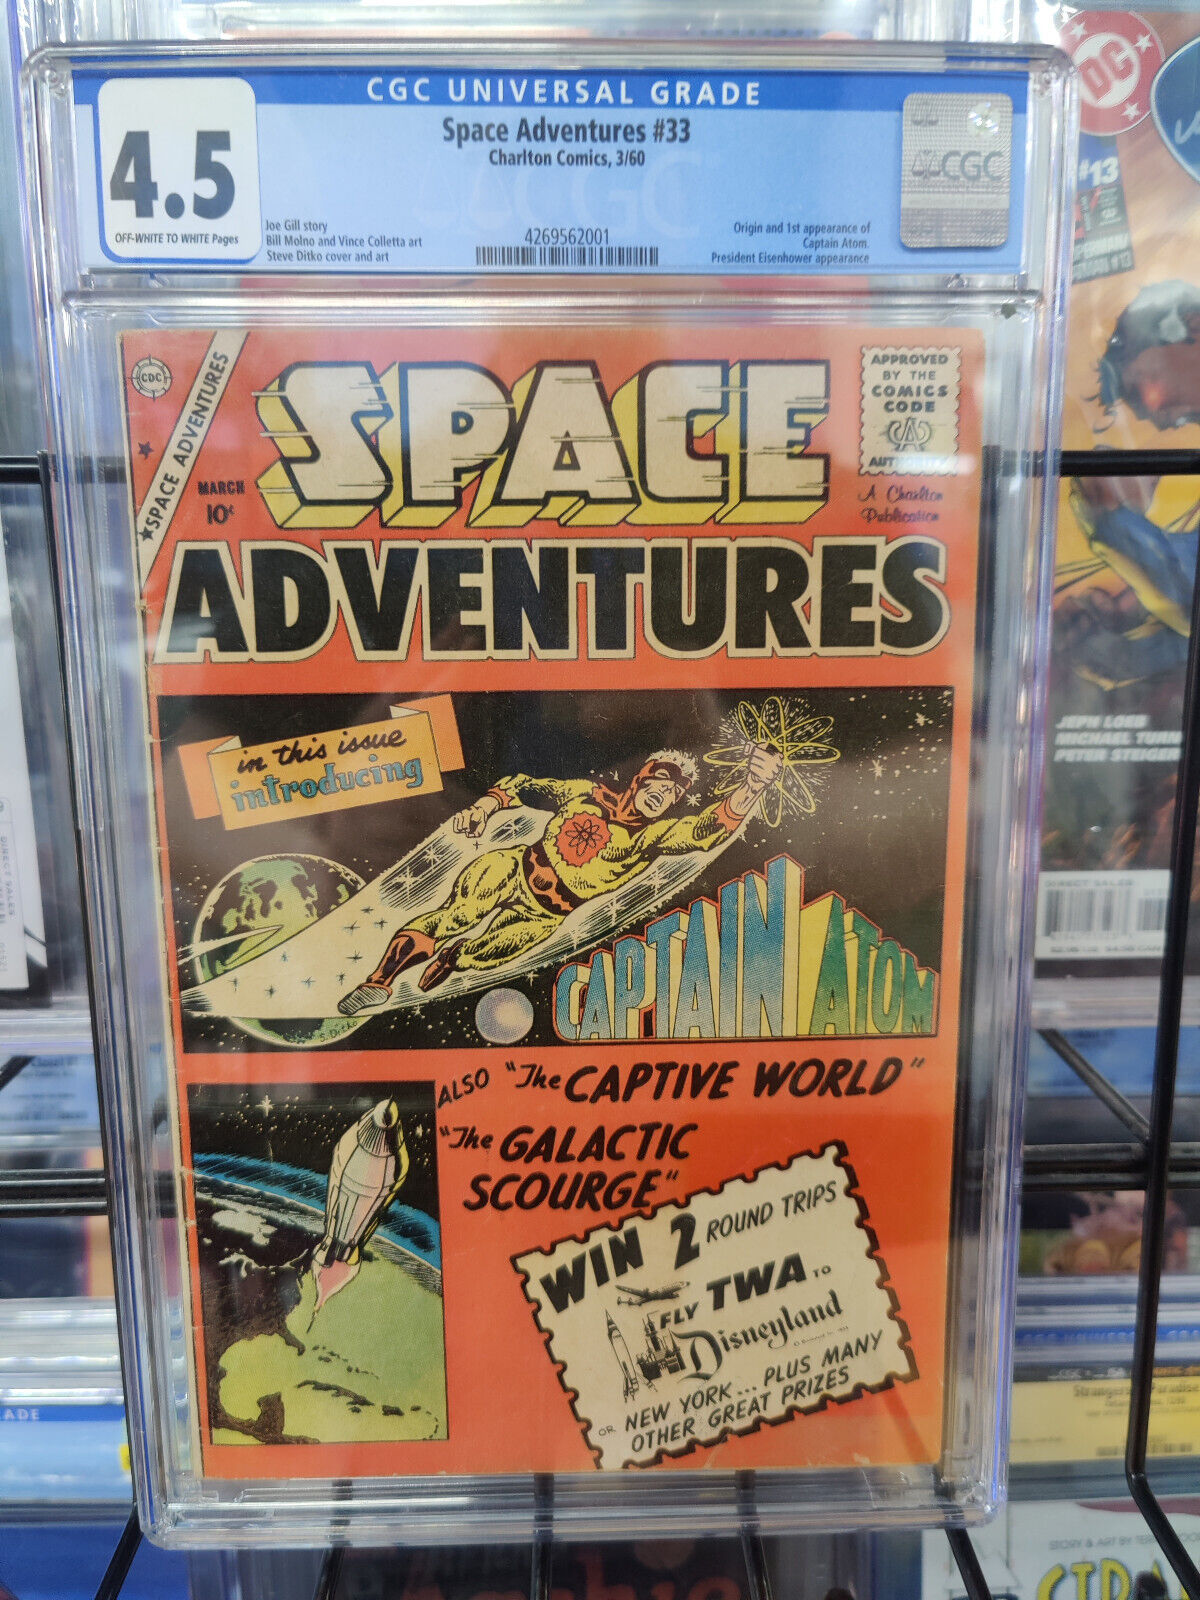 SPACE ADVENTURES #33 (1960) - CGC GRADE 4.5 - SILVER AGE DITKO CHARLTON COMICS